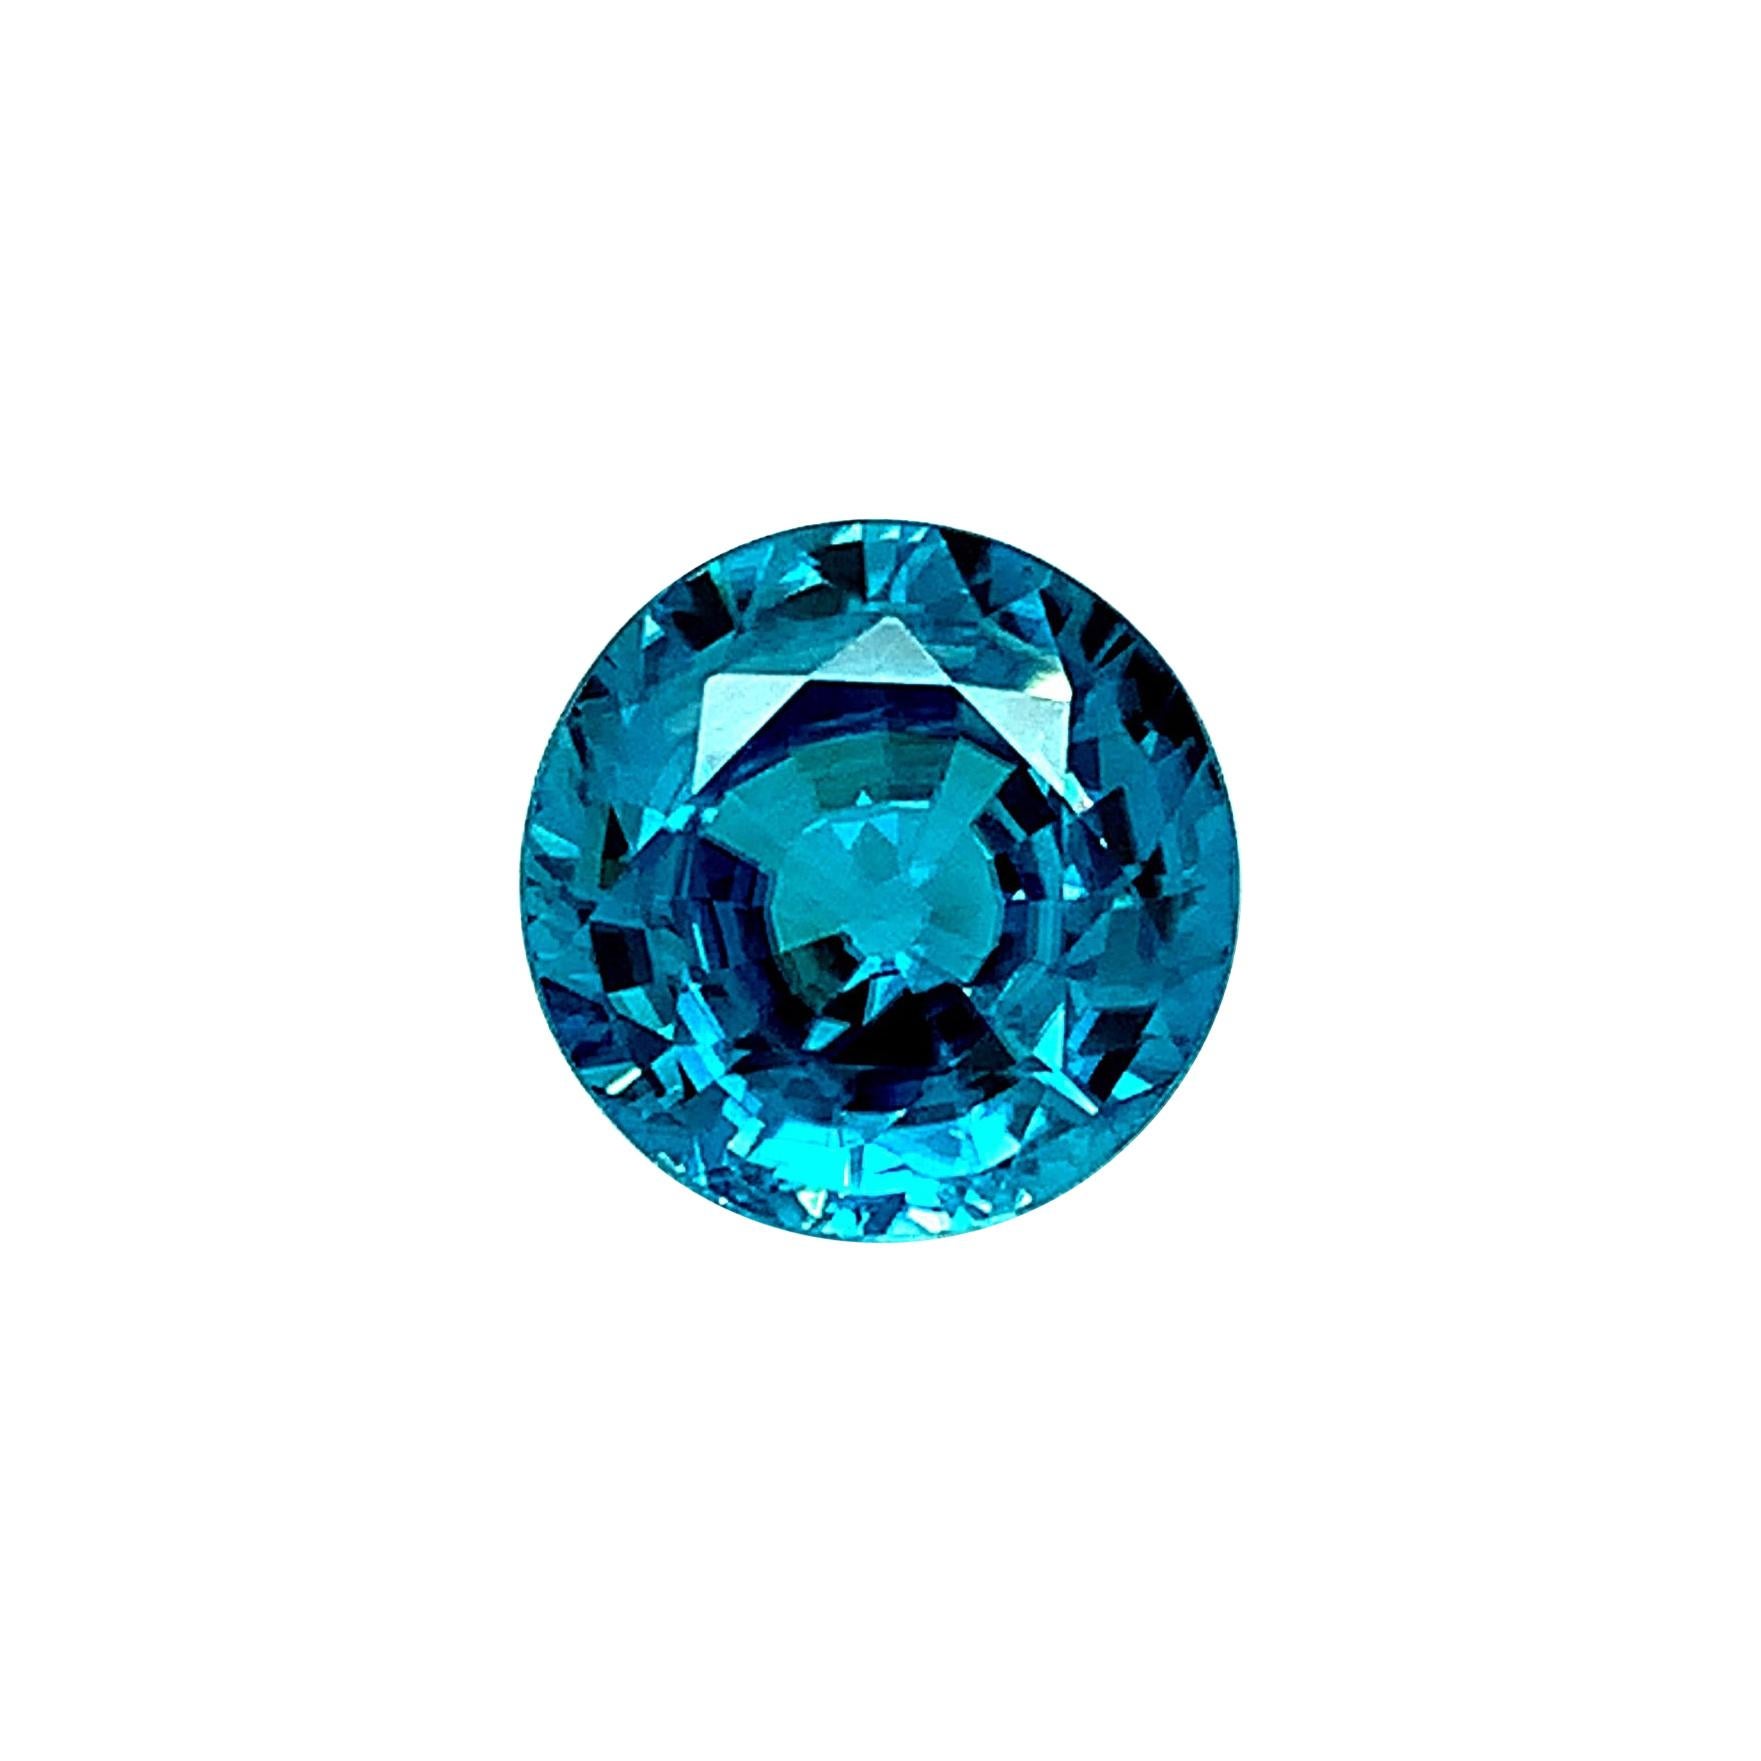 Zircon bleu rond de 10,18 carats, pierre précieuse non sertie pour pendentif ou collier